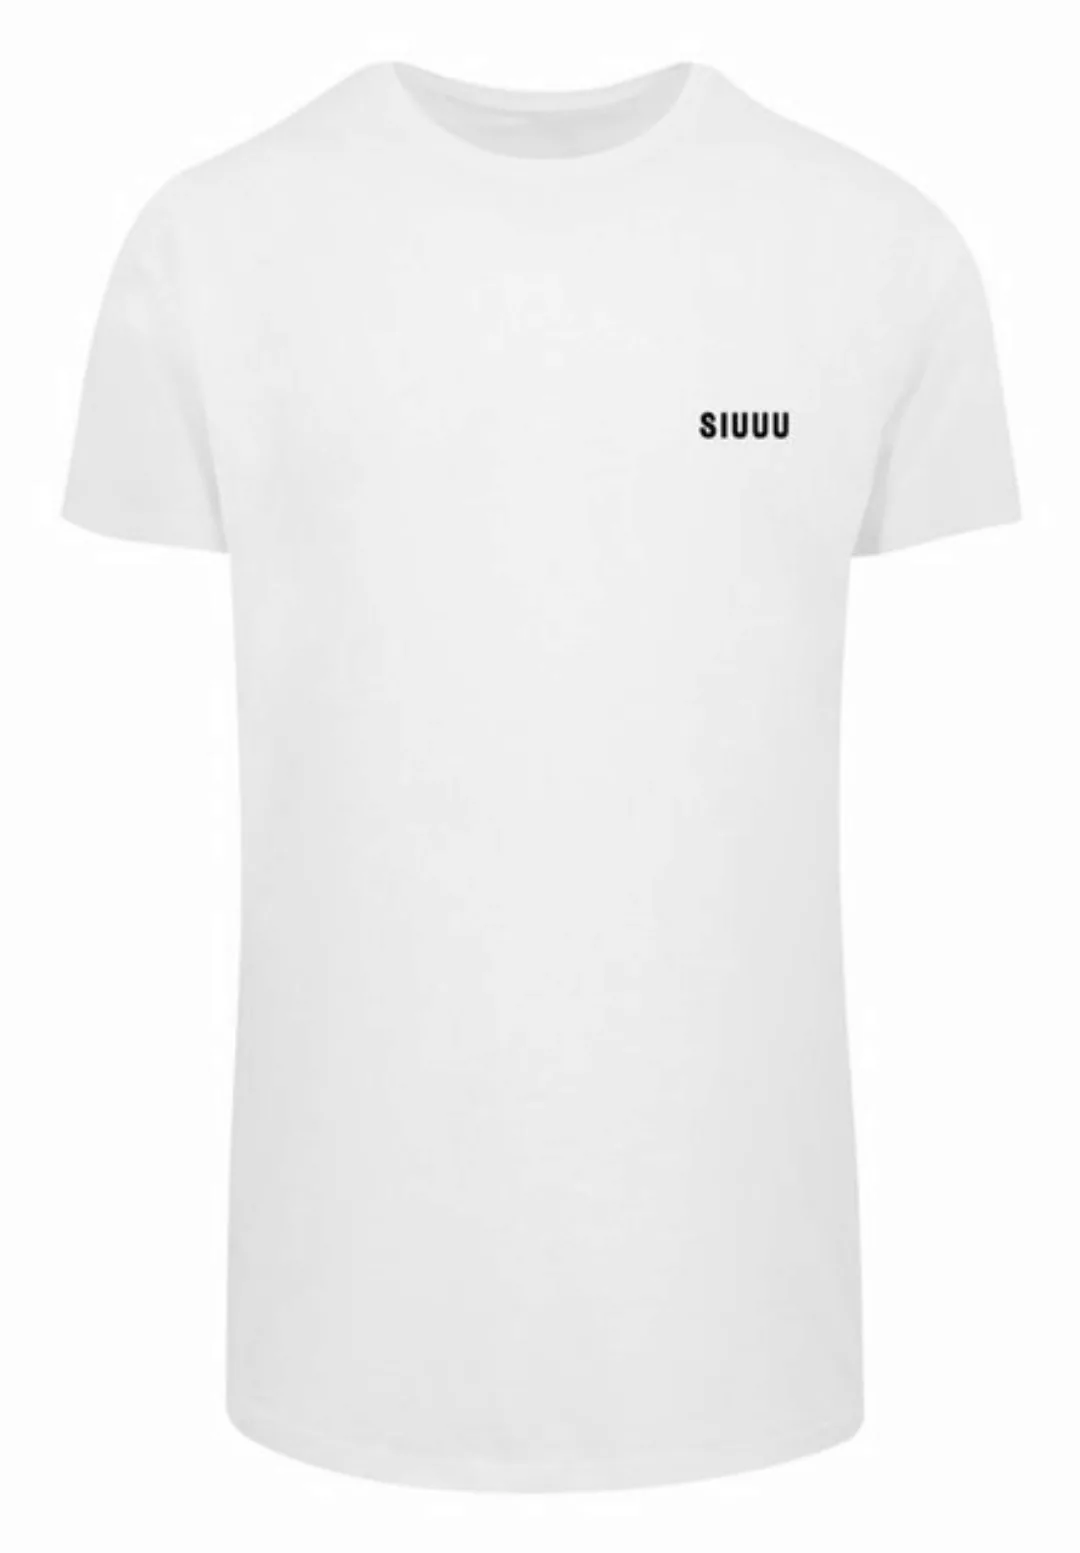 F4NT4STIC T-Shirt SIUUU Jugendwort 2022, slang, lang geschnitten günstig online kaufen